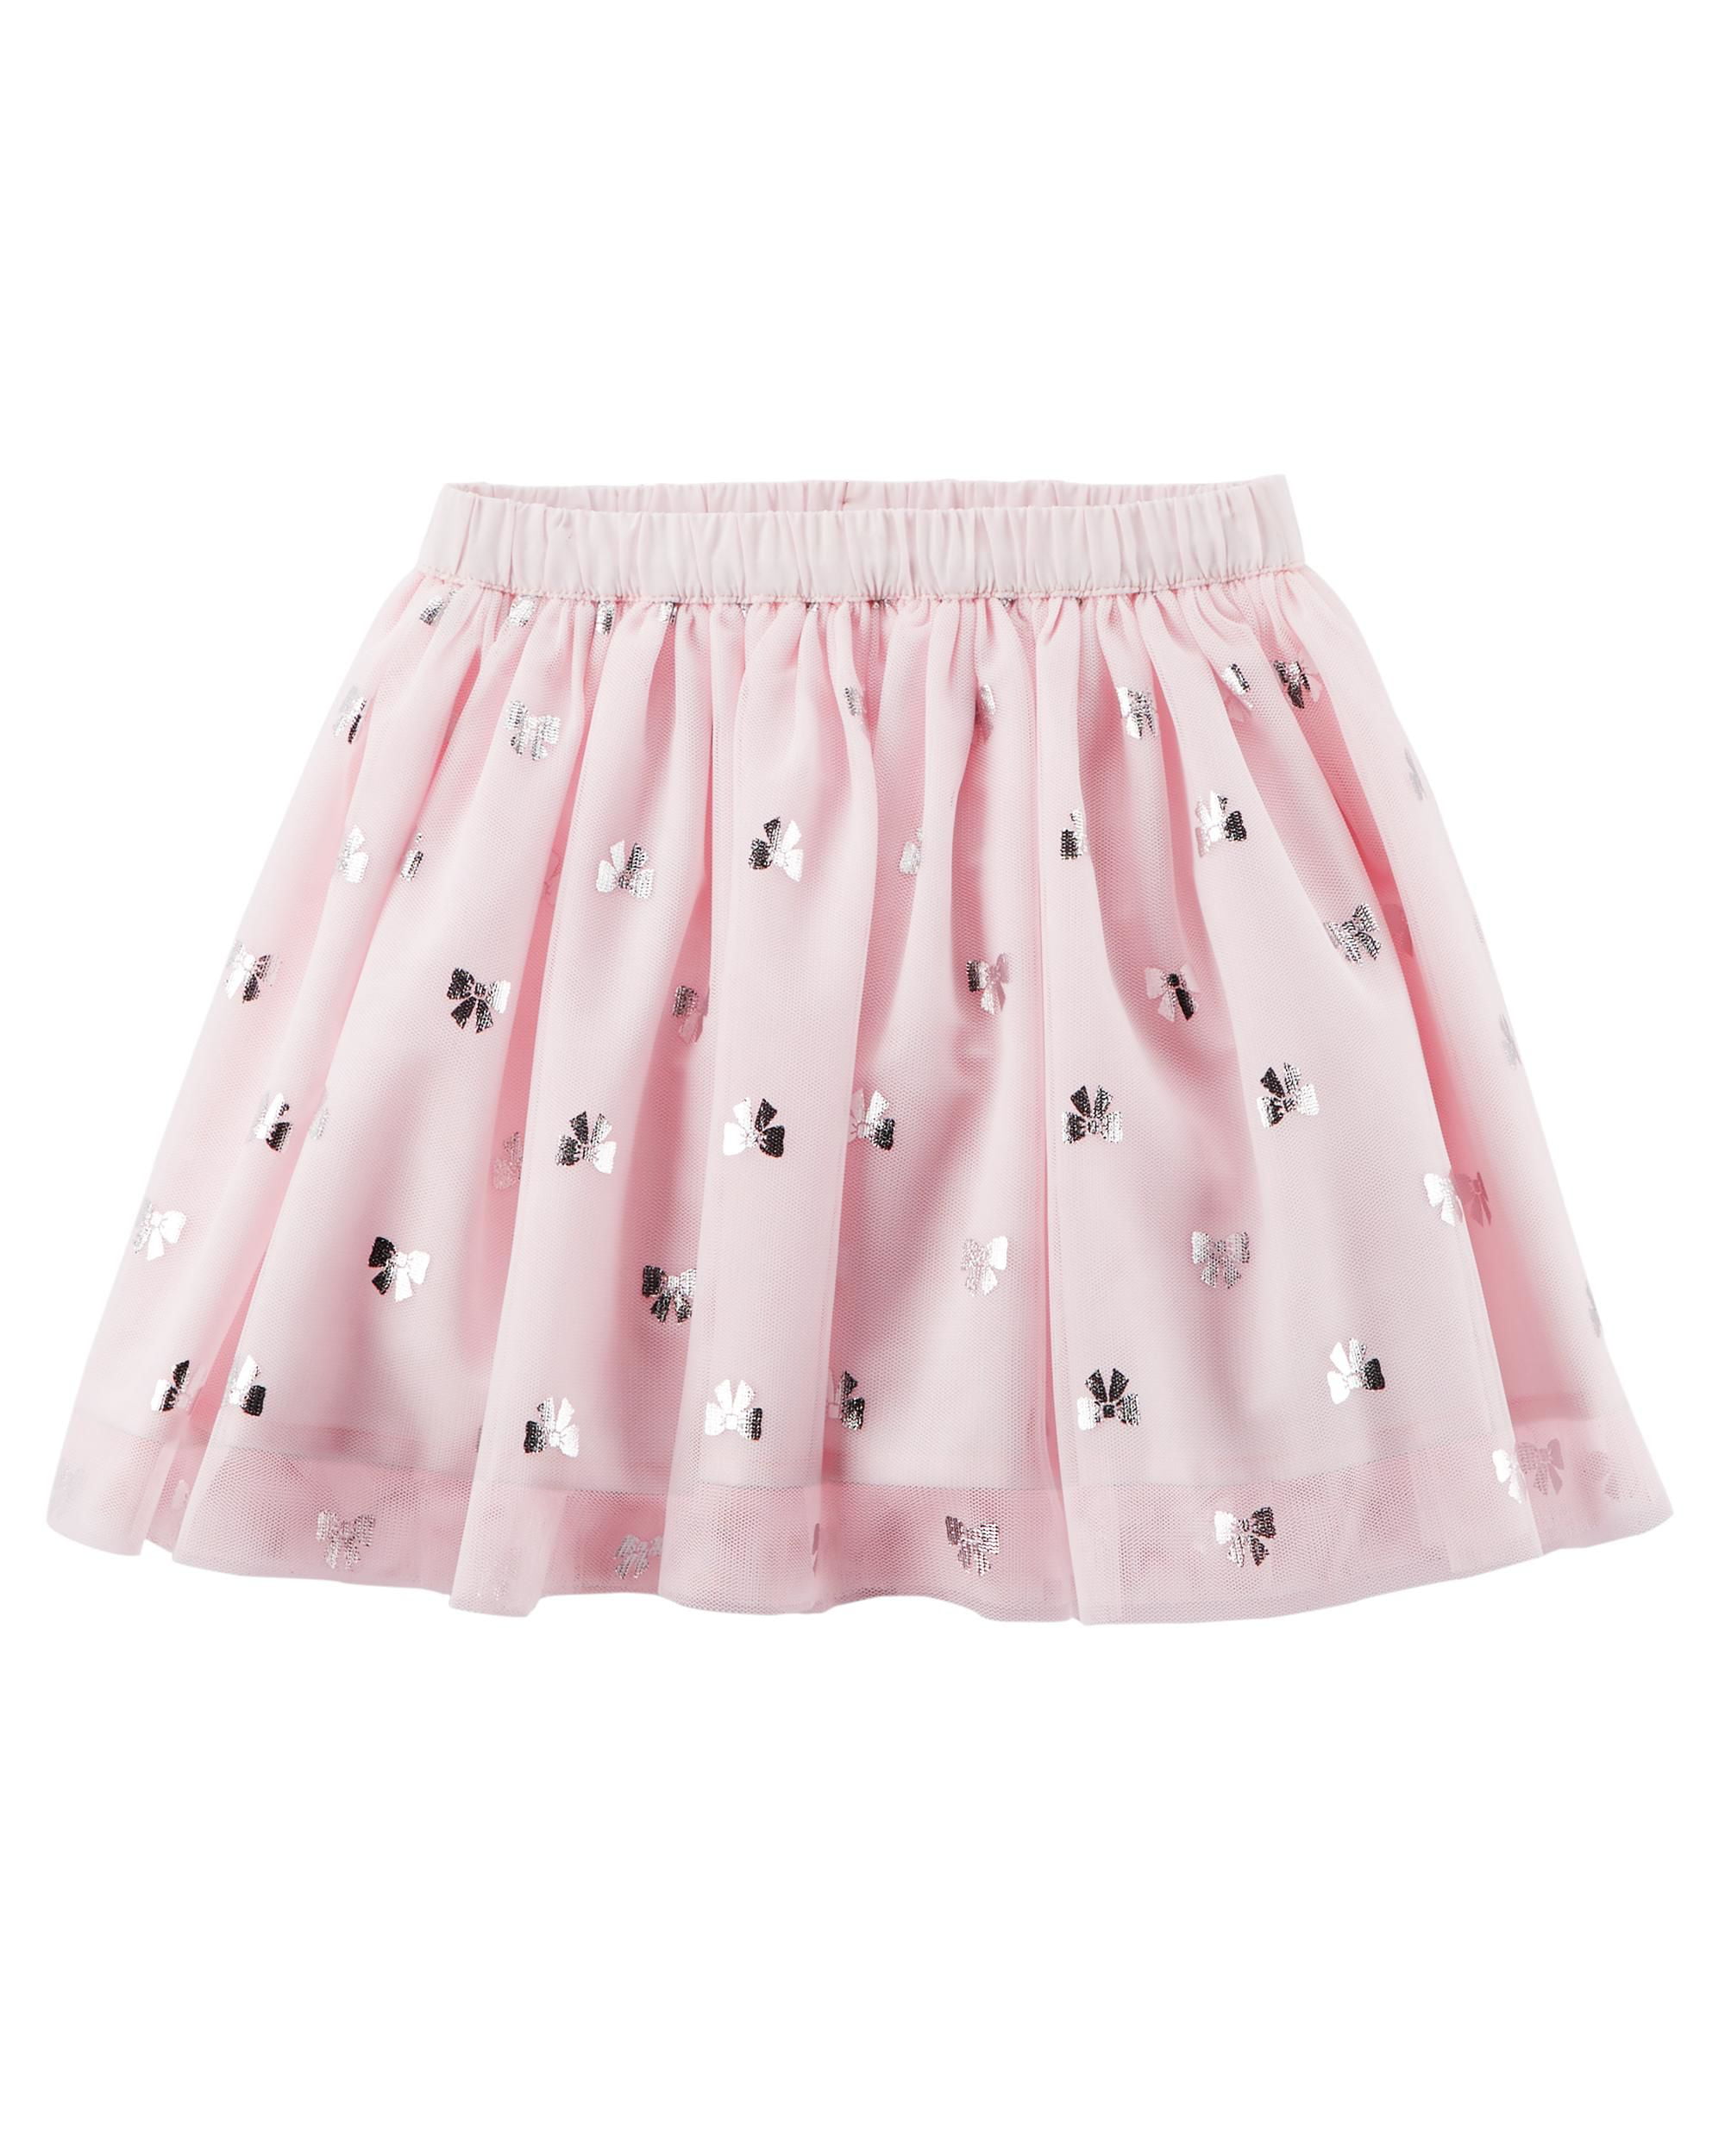 Carter's Baby Girl Unicorn Tutu Dress Pink Size 12 Months NWT 